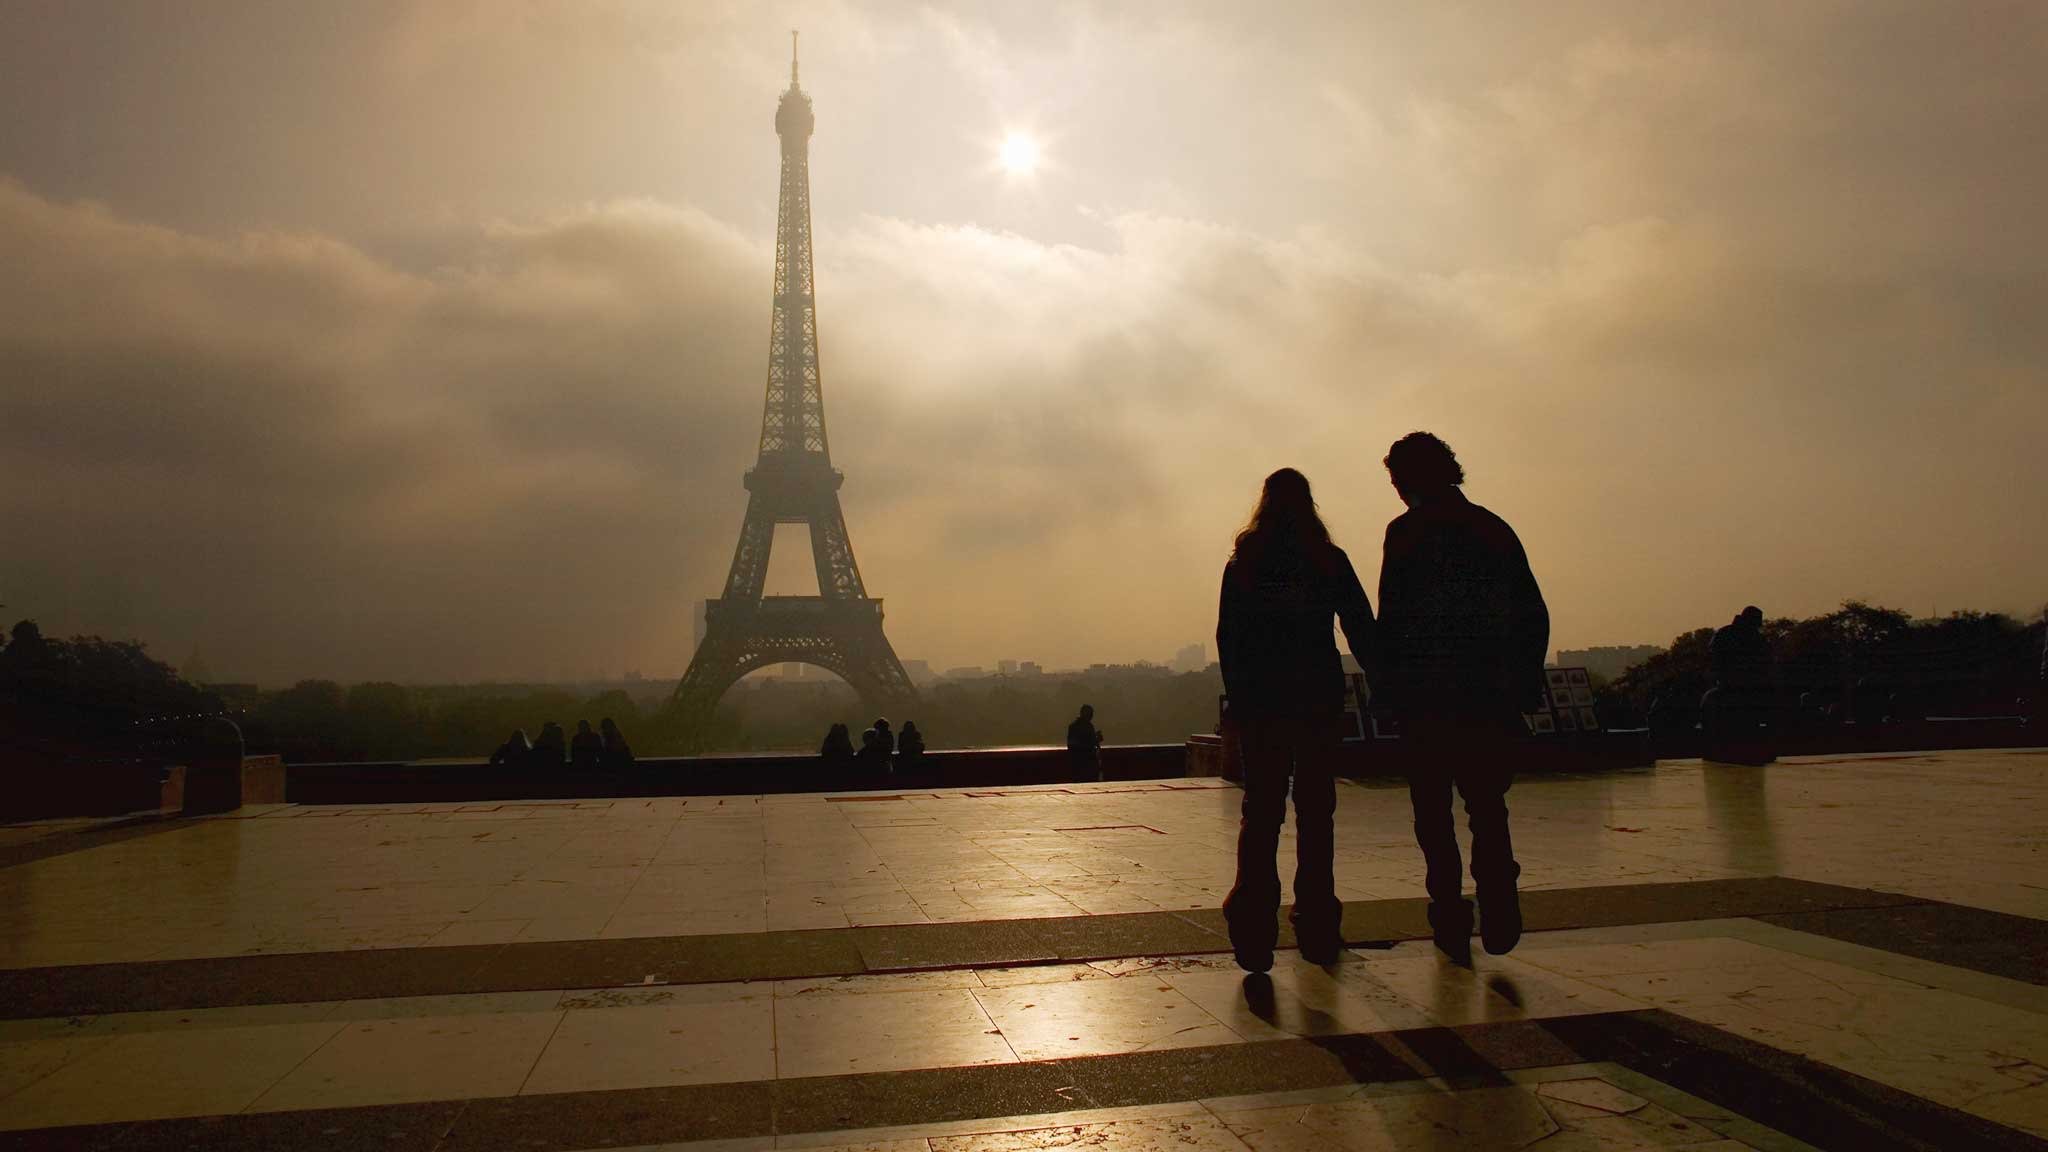 Одна ночь в париже. Париж Эйфелева башня Эдит Пиаф. Влюбленные в Париже. Париж любовь. Париж романтика.